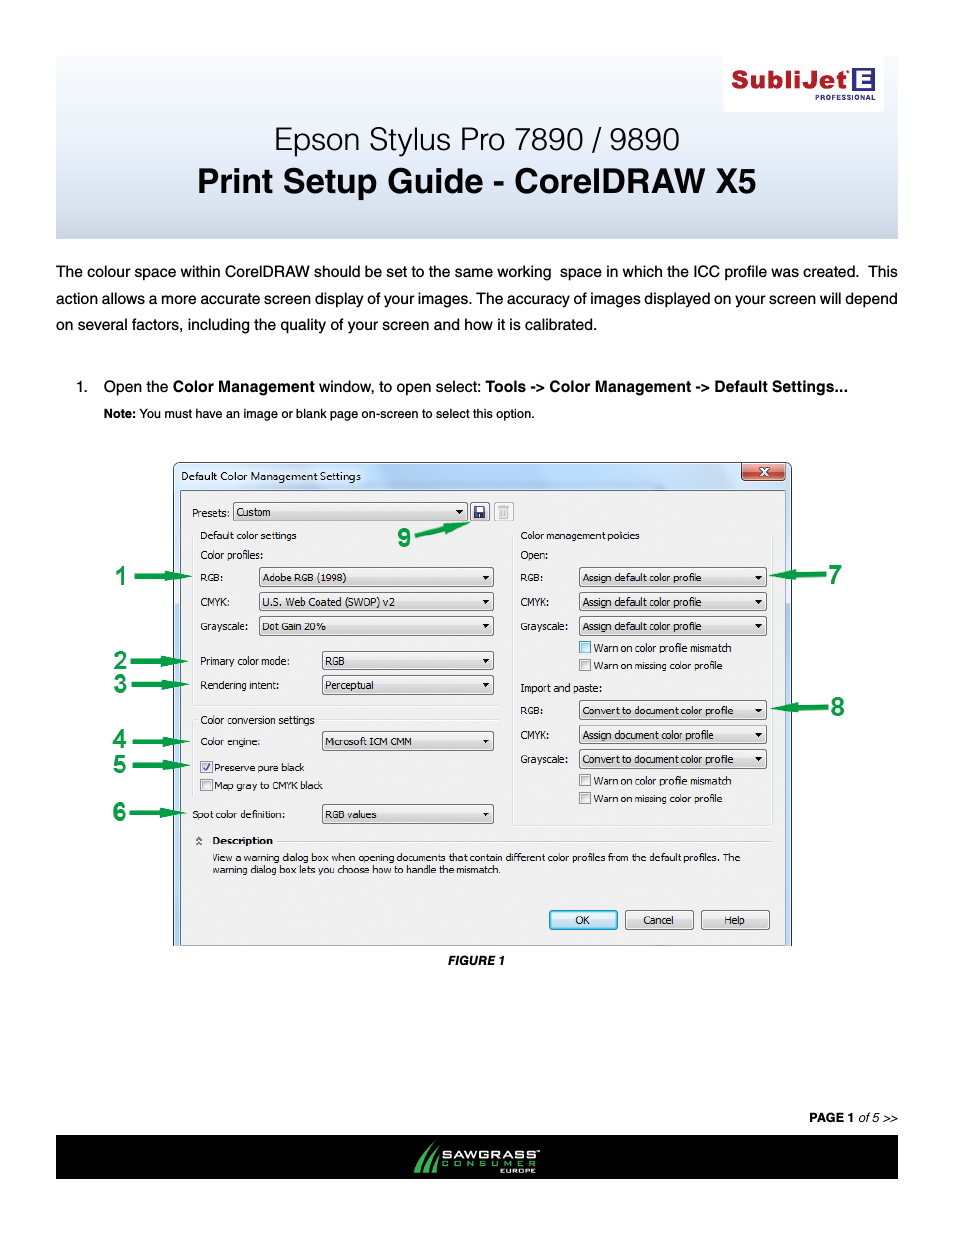 SubliJet E Epson Stylus Pro 7890 (Windows ICC Profile Setup): Print & Setup Guide CorelDRAW X5